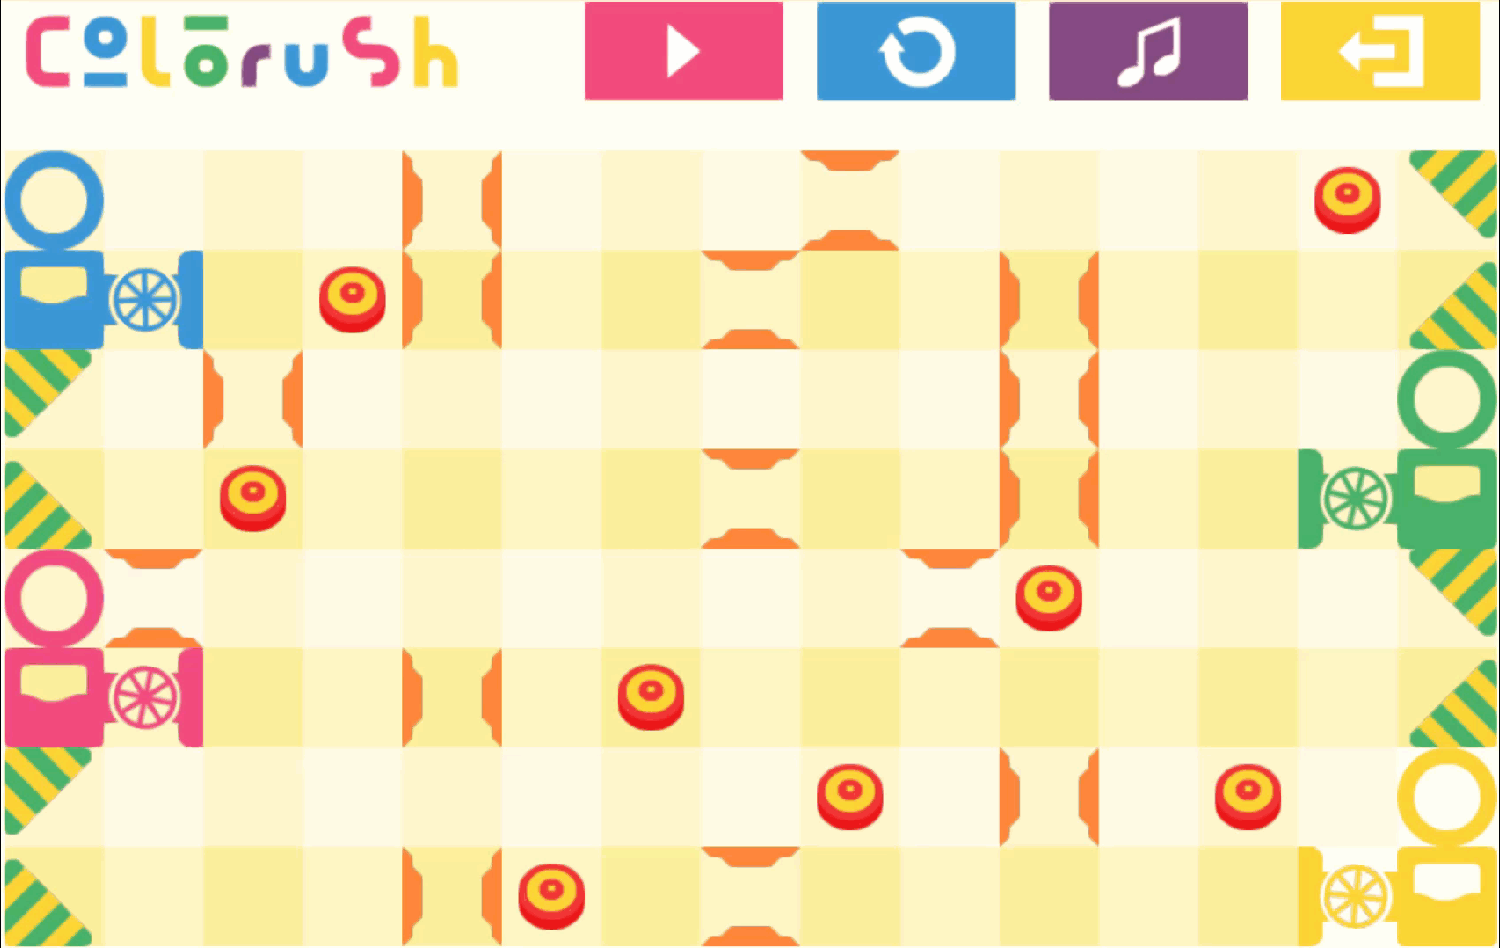 Colorush Game Level 24 Screenshot.